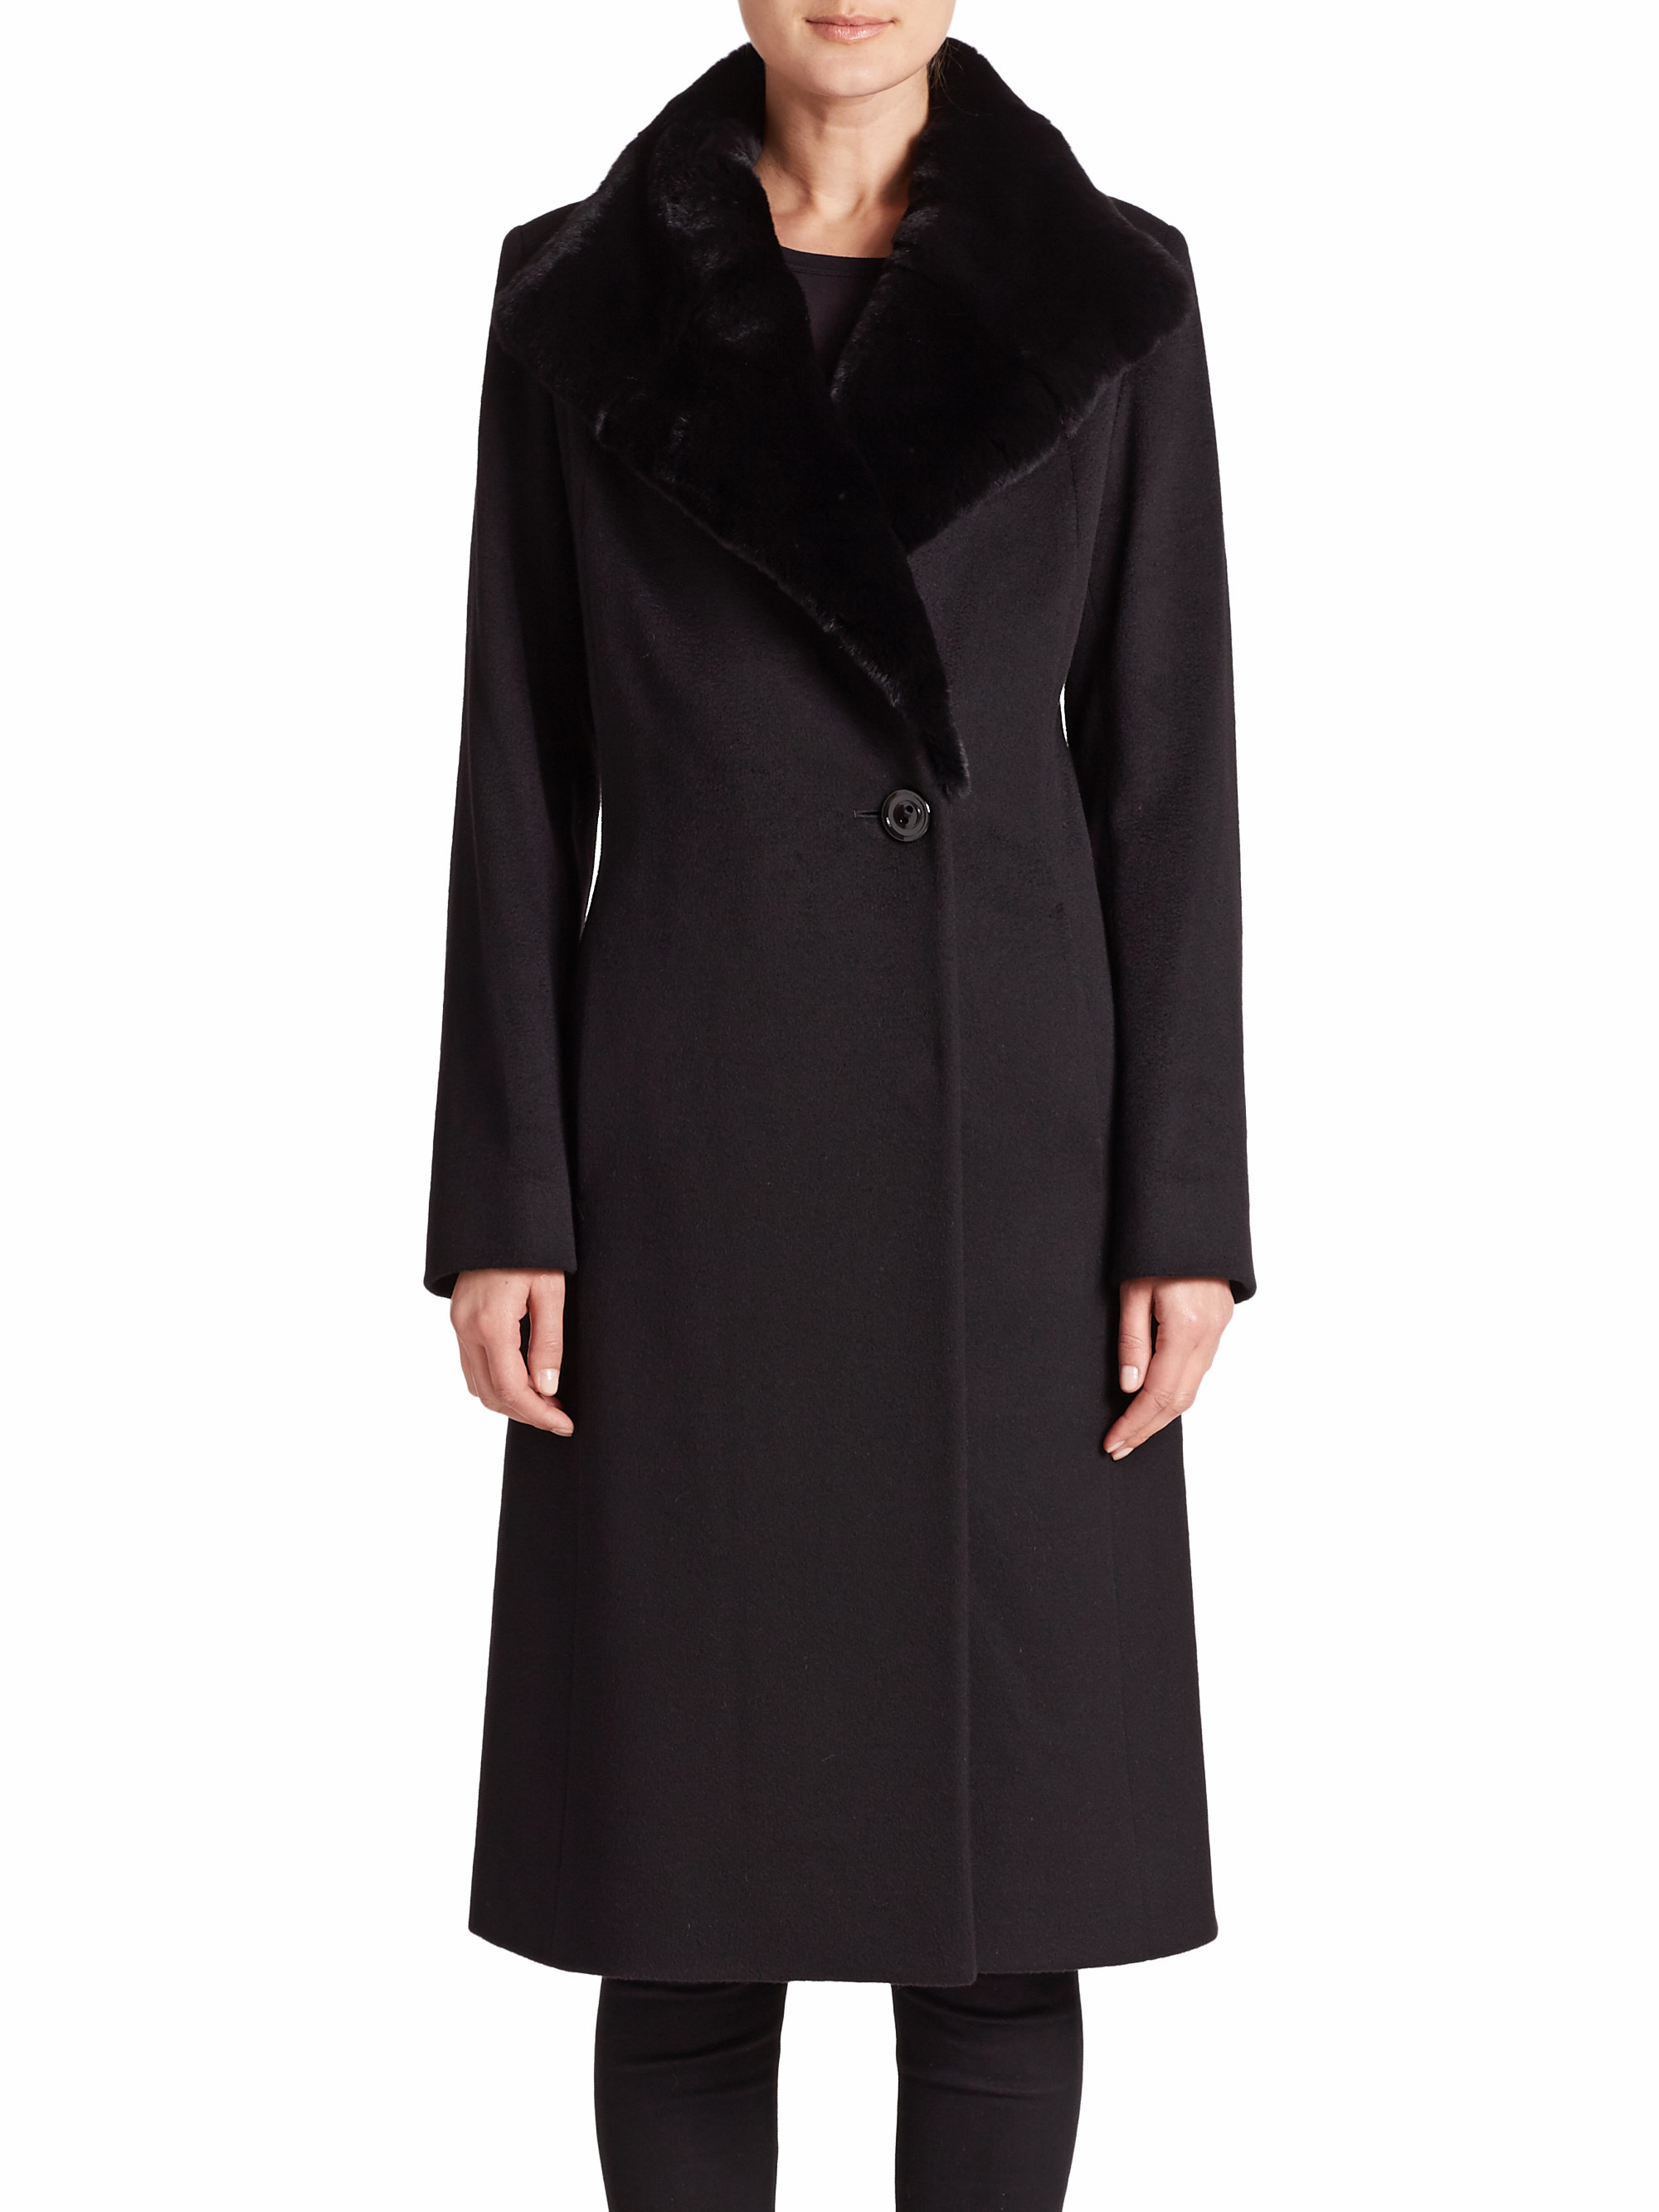 Lyst - Cinzia rocca Fur-collar Wool Walking Coat in Black